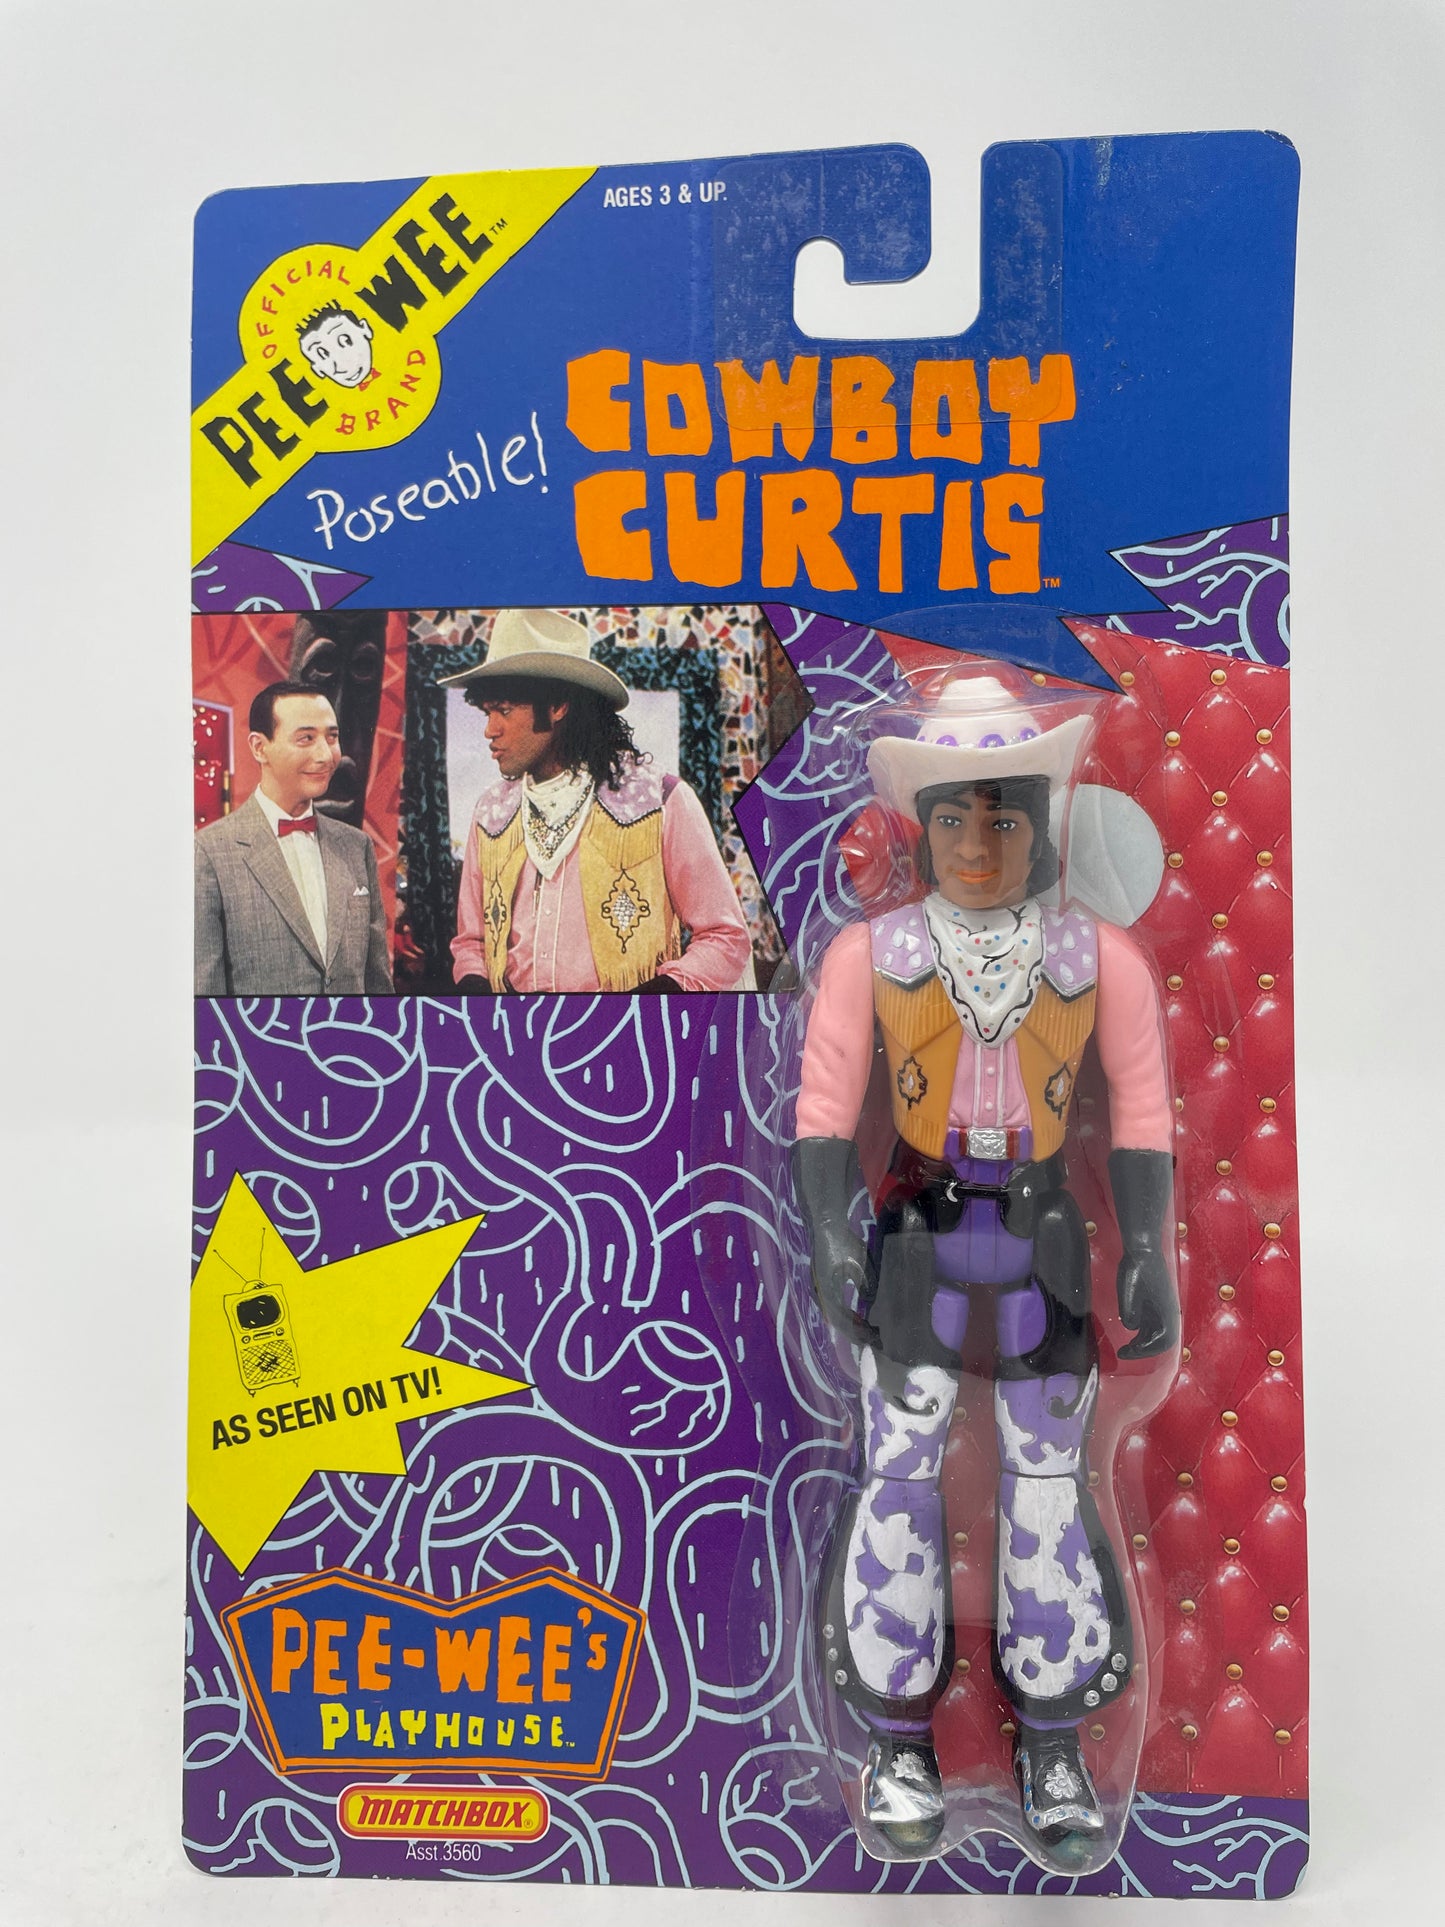 COWBOY CURTIS - PEE WEE'S PLAYHOUSE - 1988 MATCHBOX